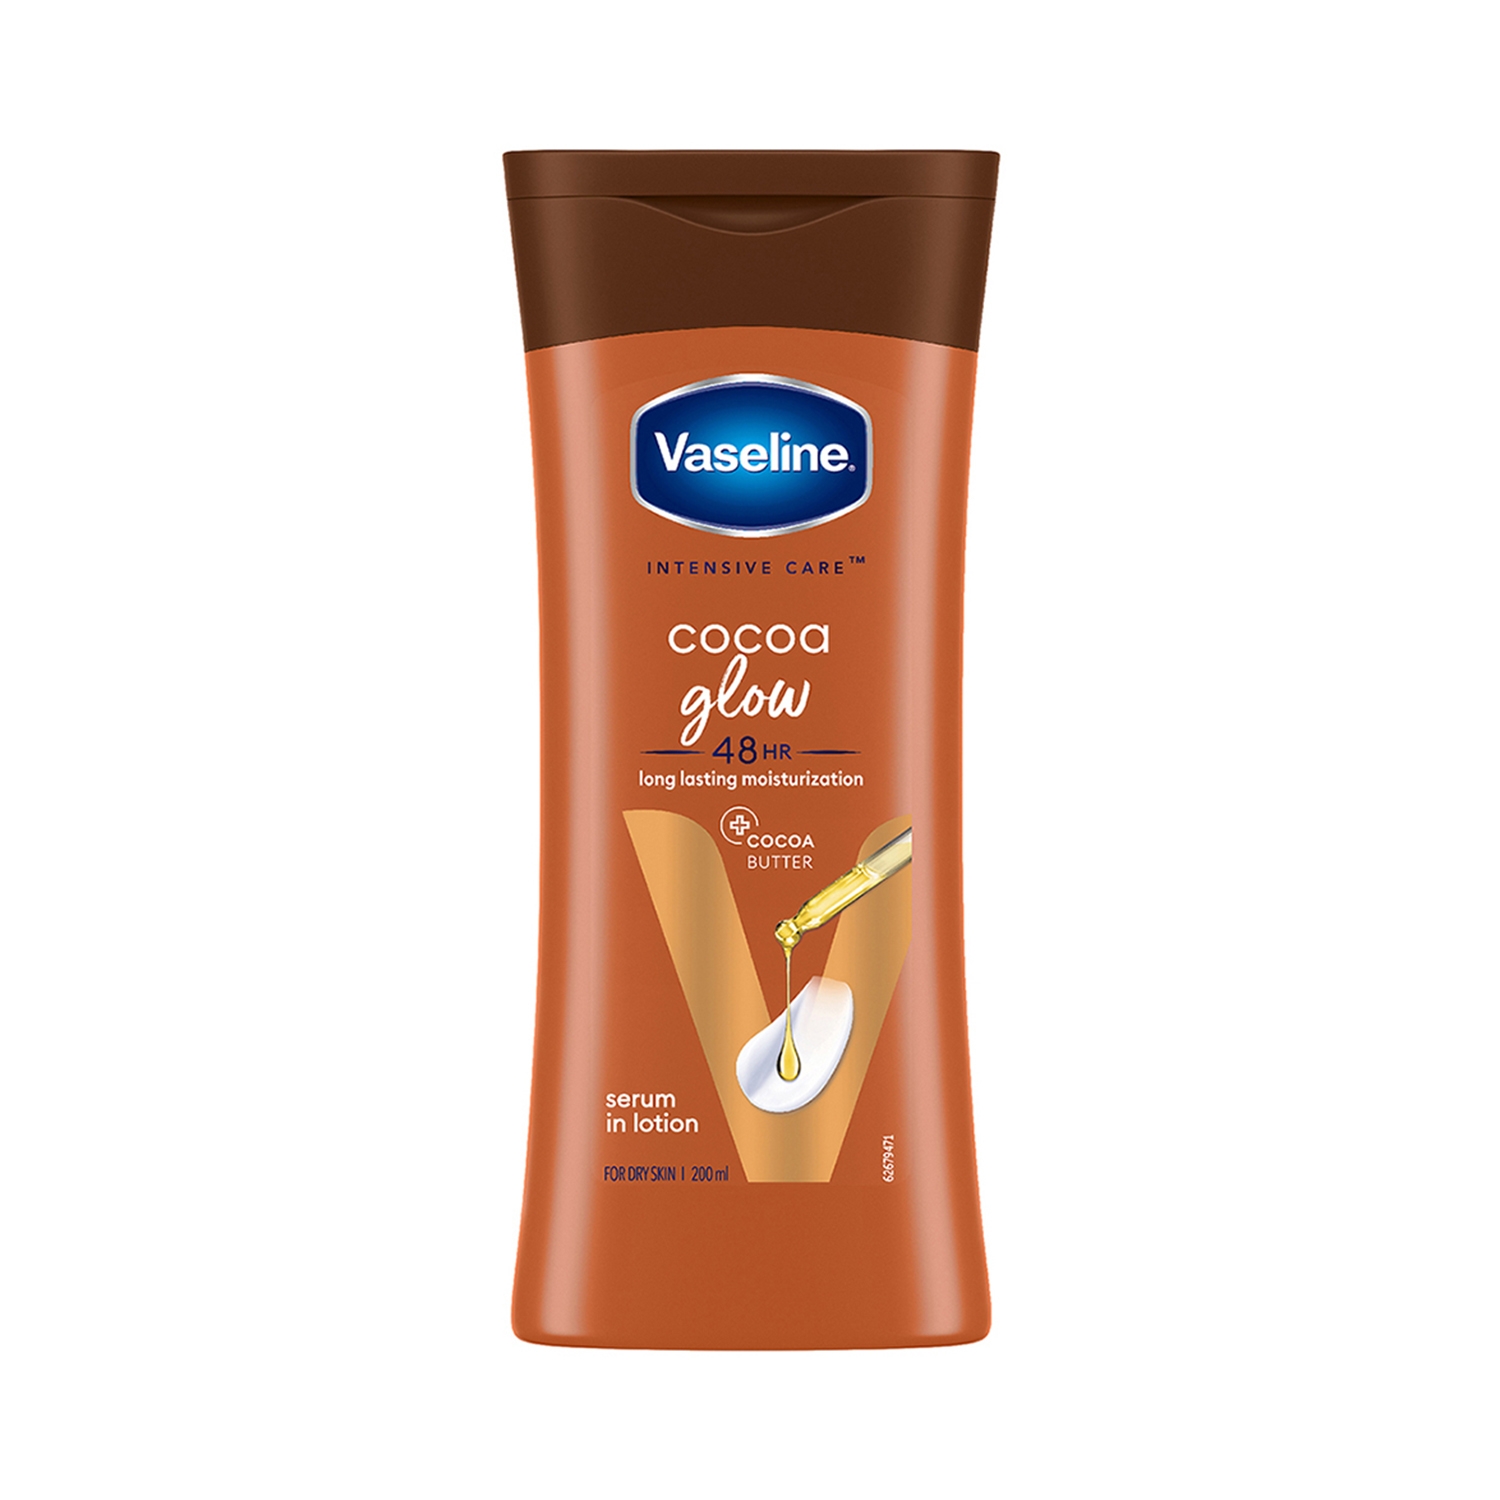 Vaseline | Vaseline Intensive Care Cocoa Glow Body Lotion - (200ml)